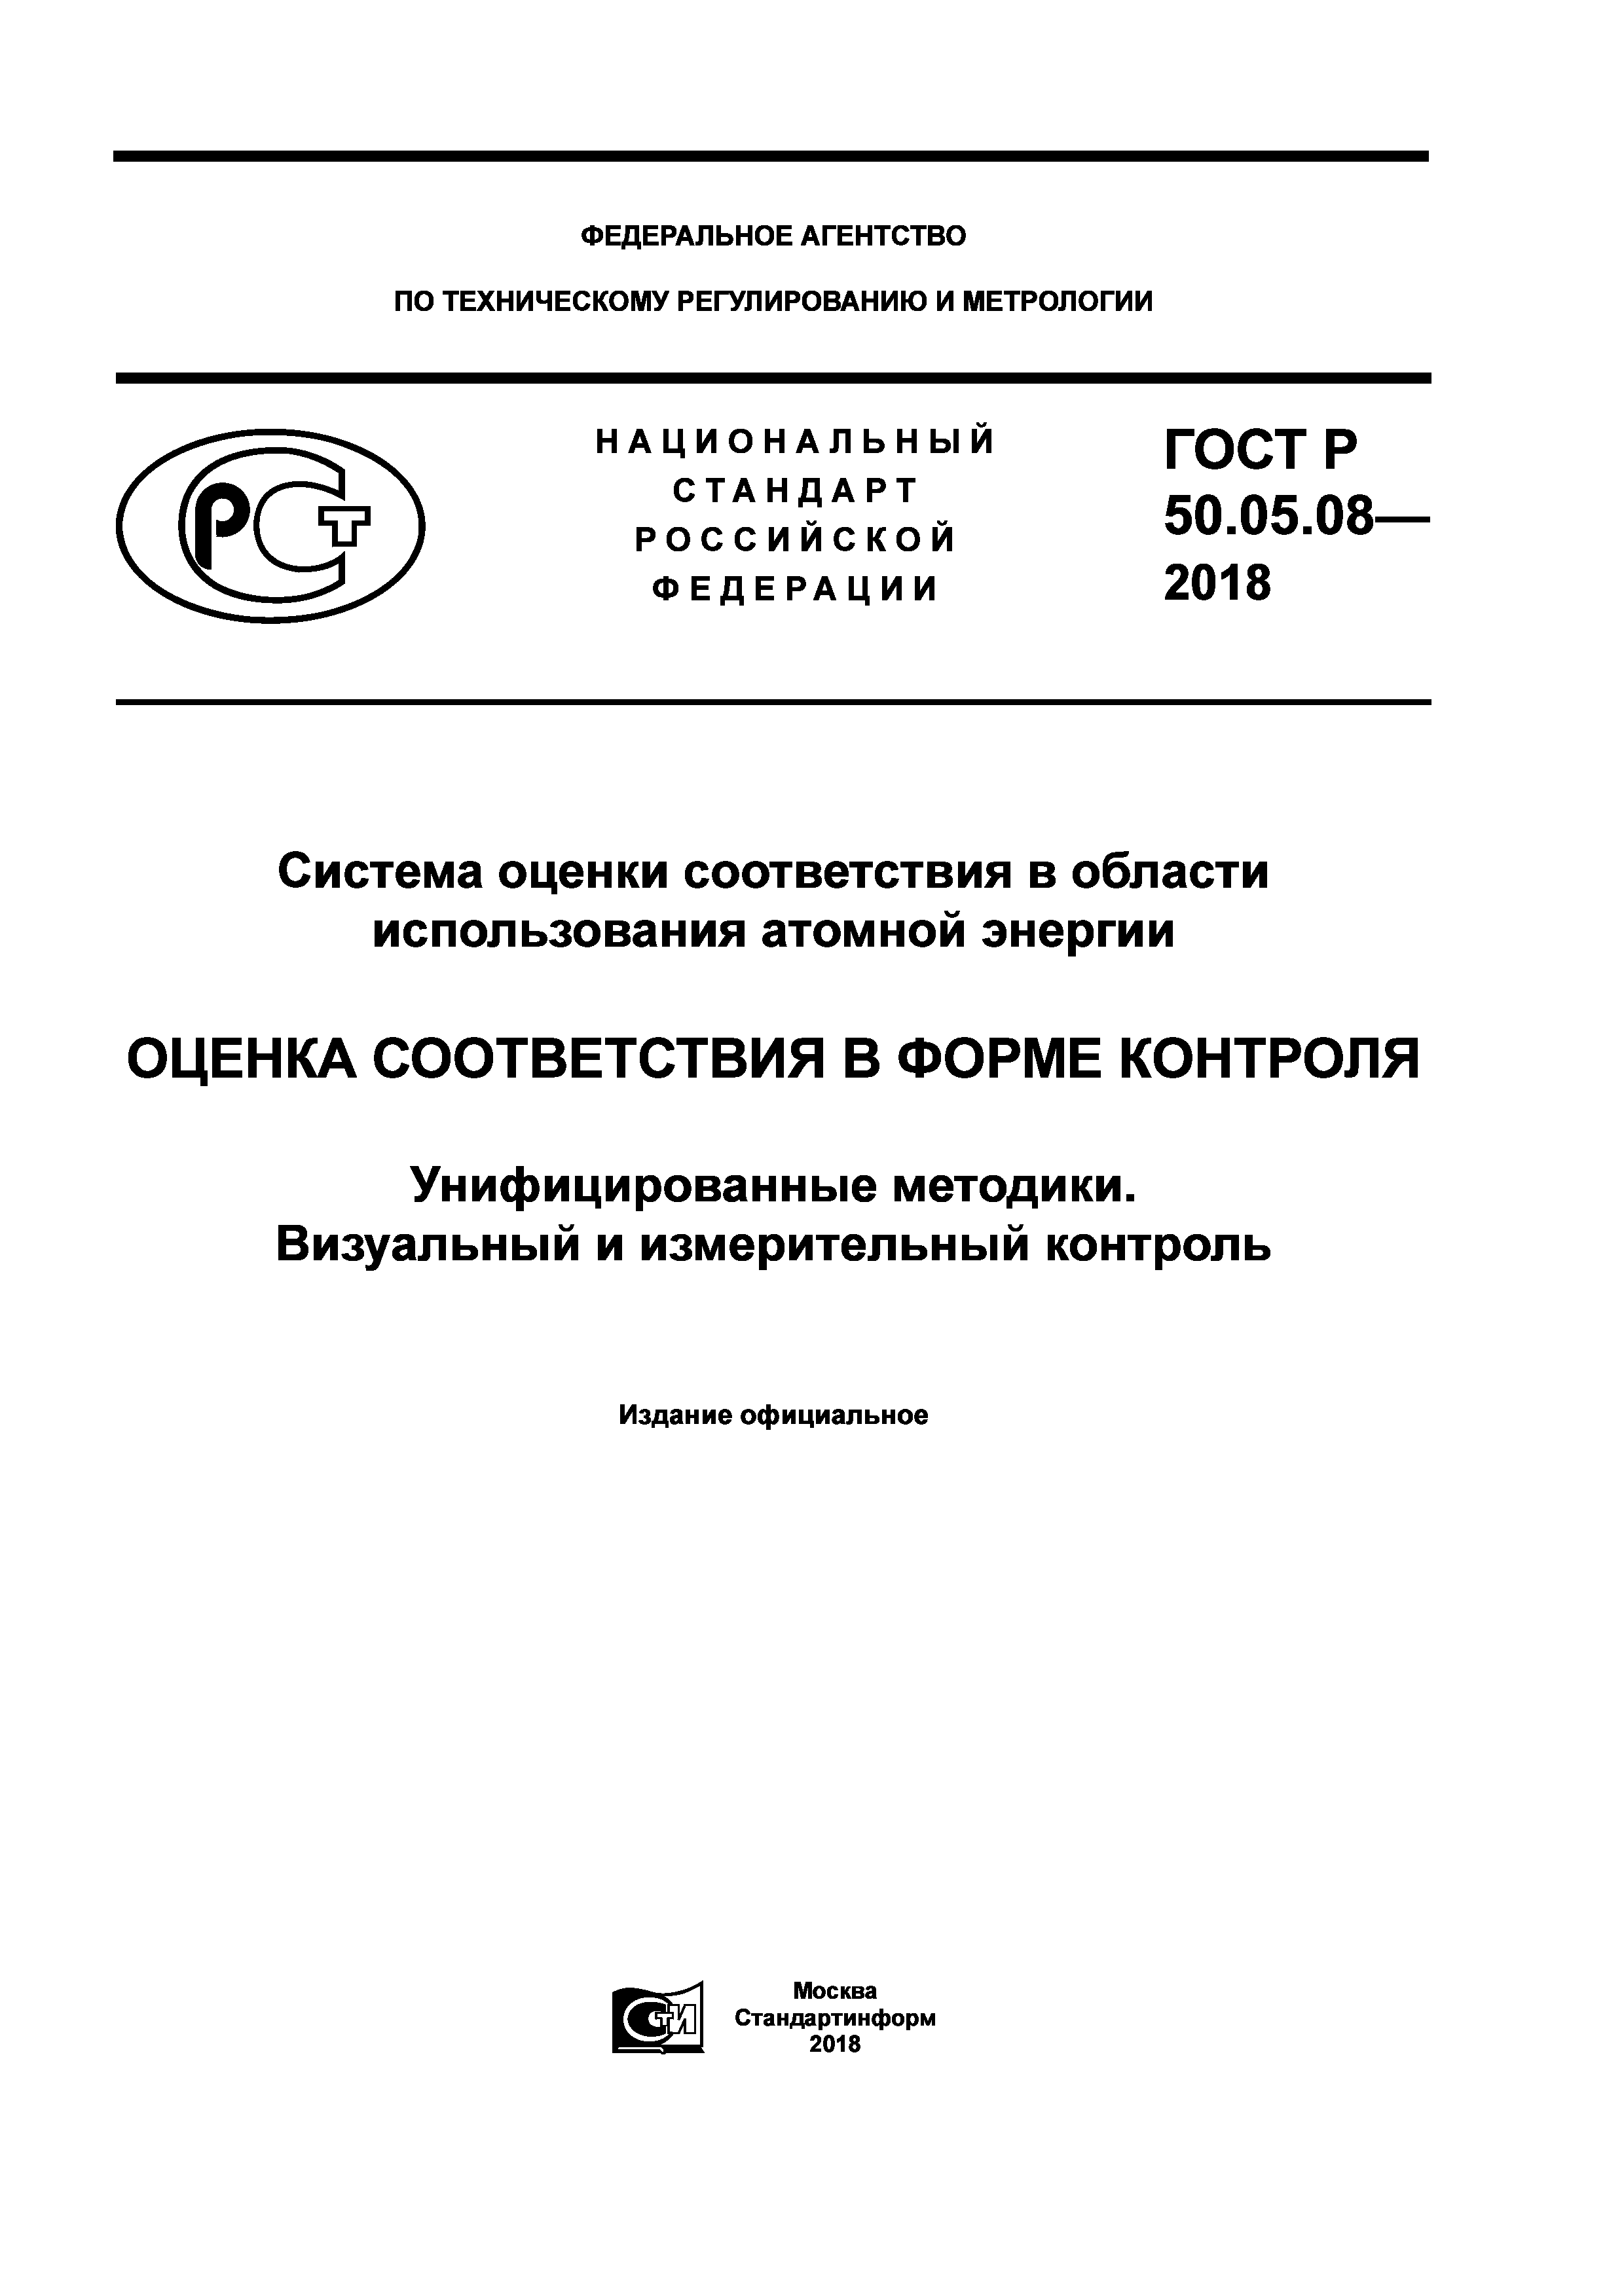 ГОСТ Р 50.05.08-2018